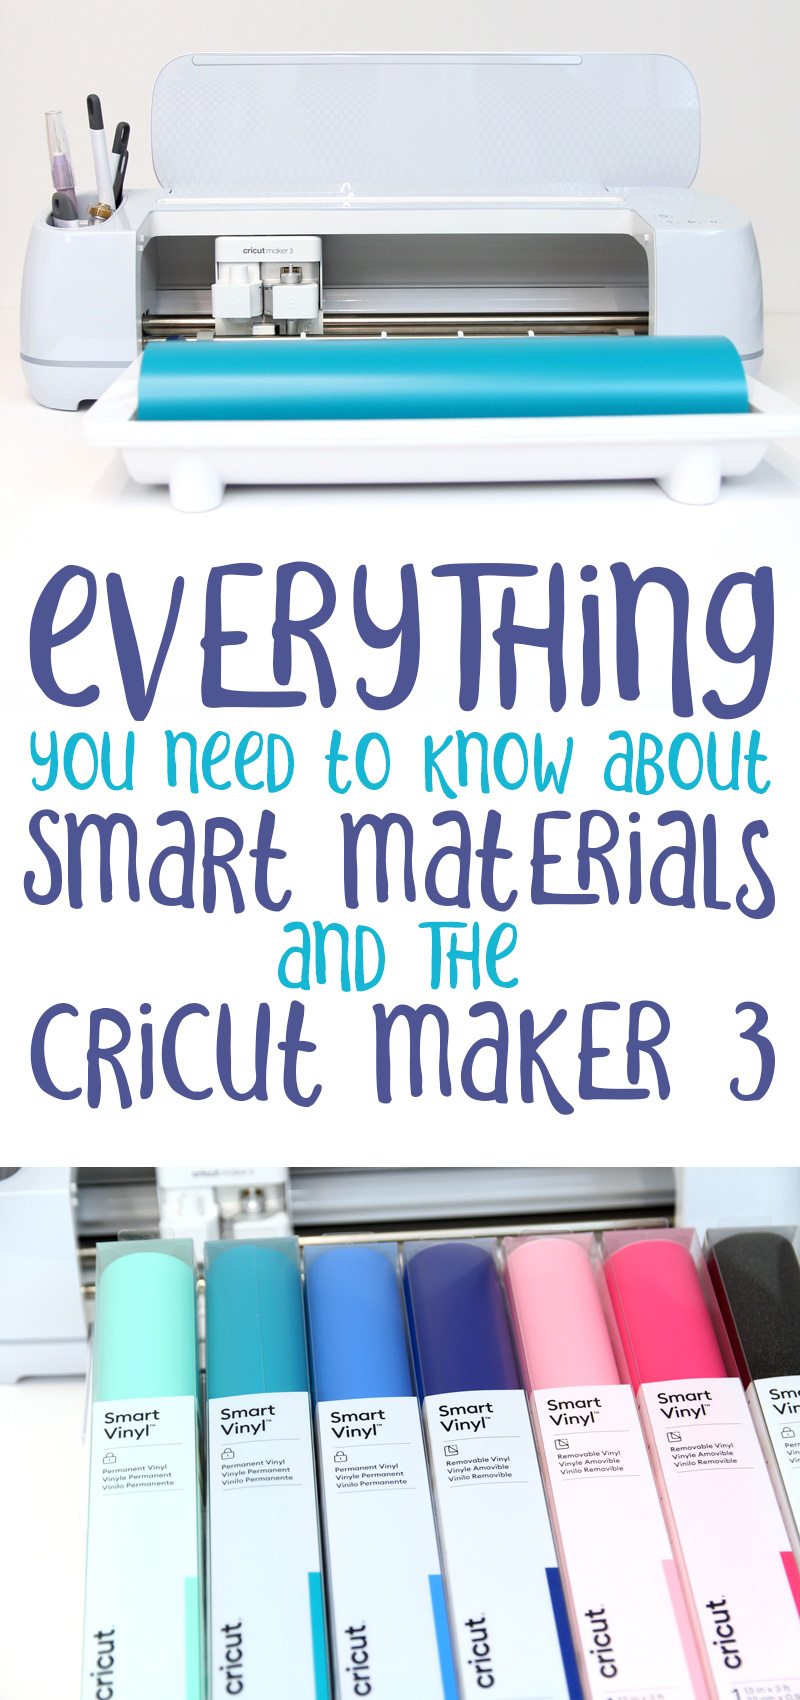 Cricut Maker 3 Review & A Safari Playroom Decal * Moms and Crafters